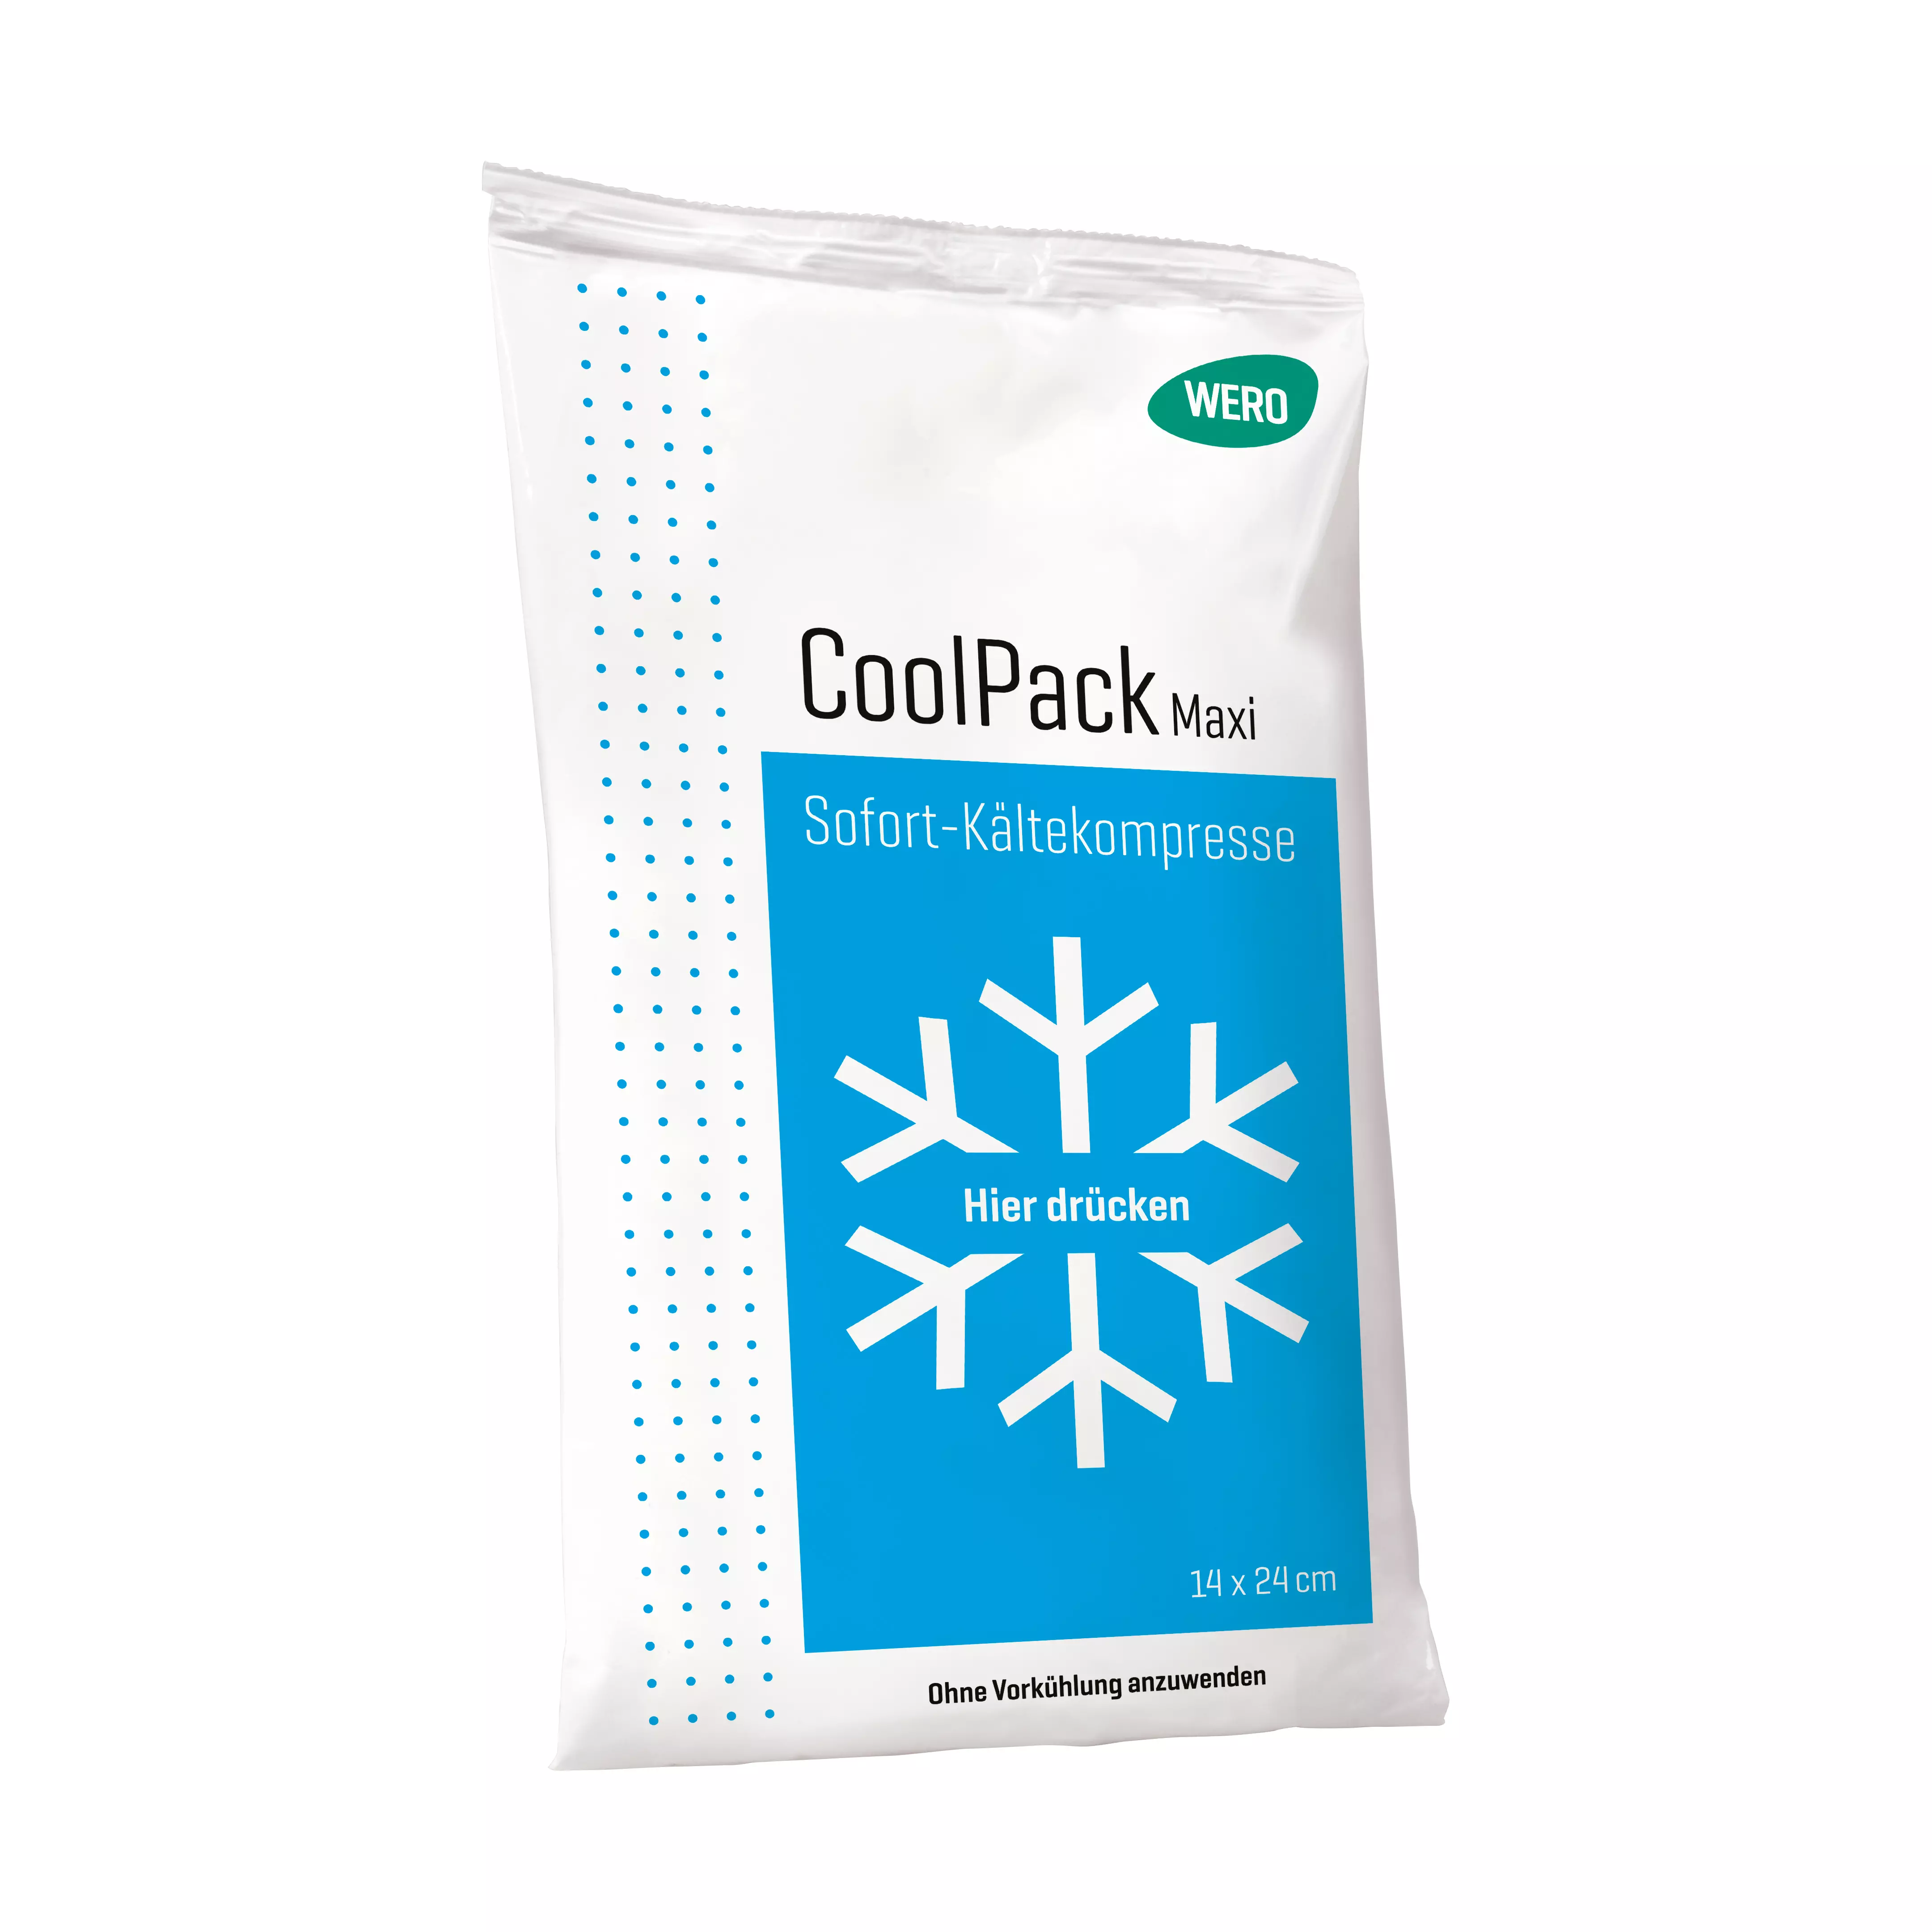 WERO CoolPack instant cold compress - Maxi, 1 pc